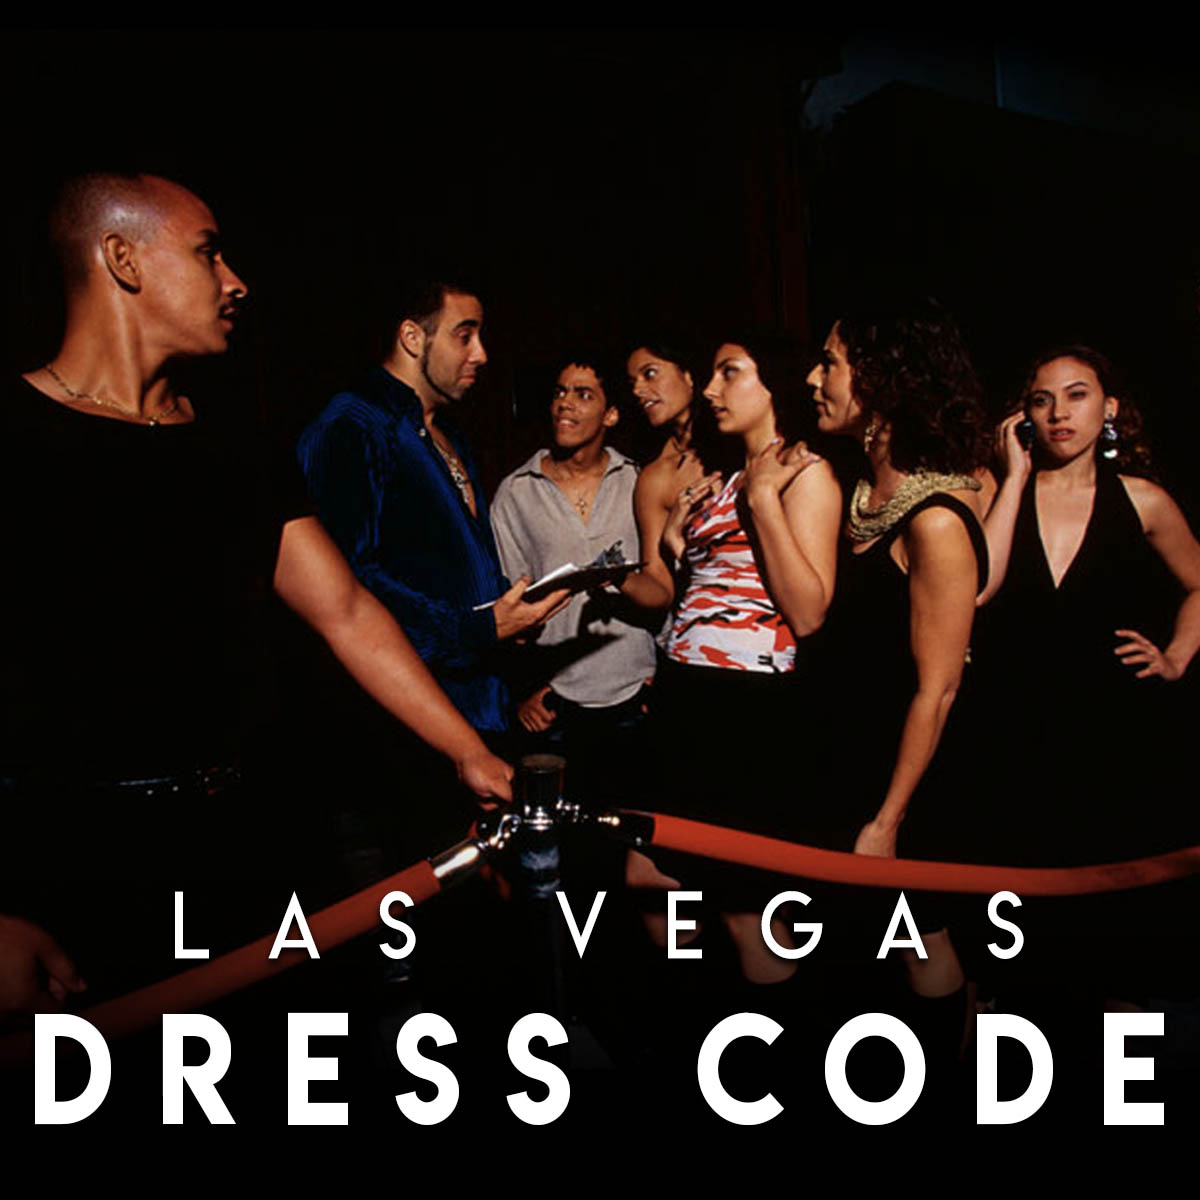 Las Vegas Pool Party Dress Code - What to Wear?